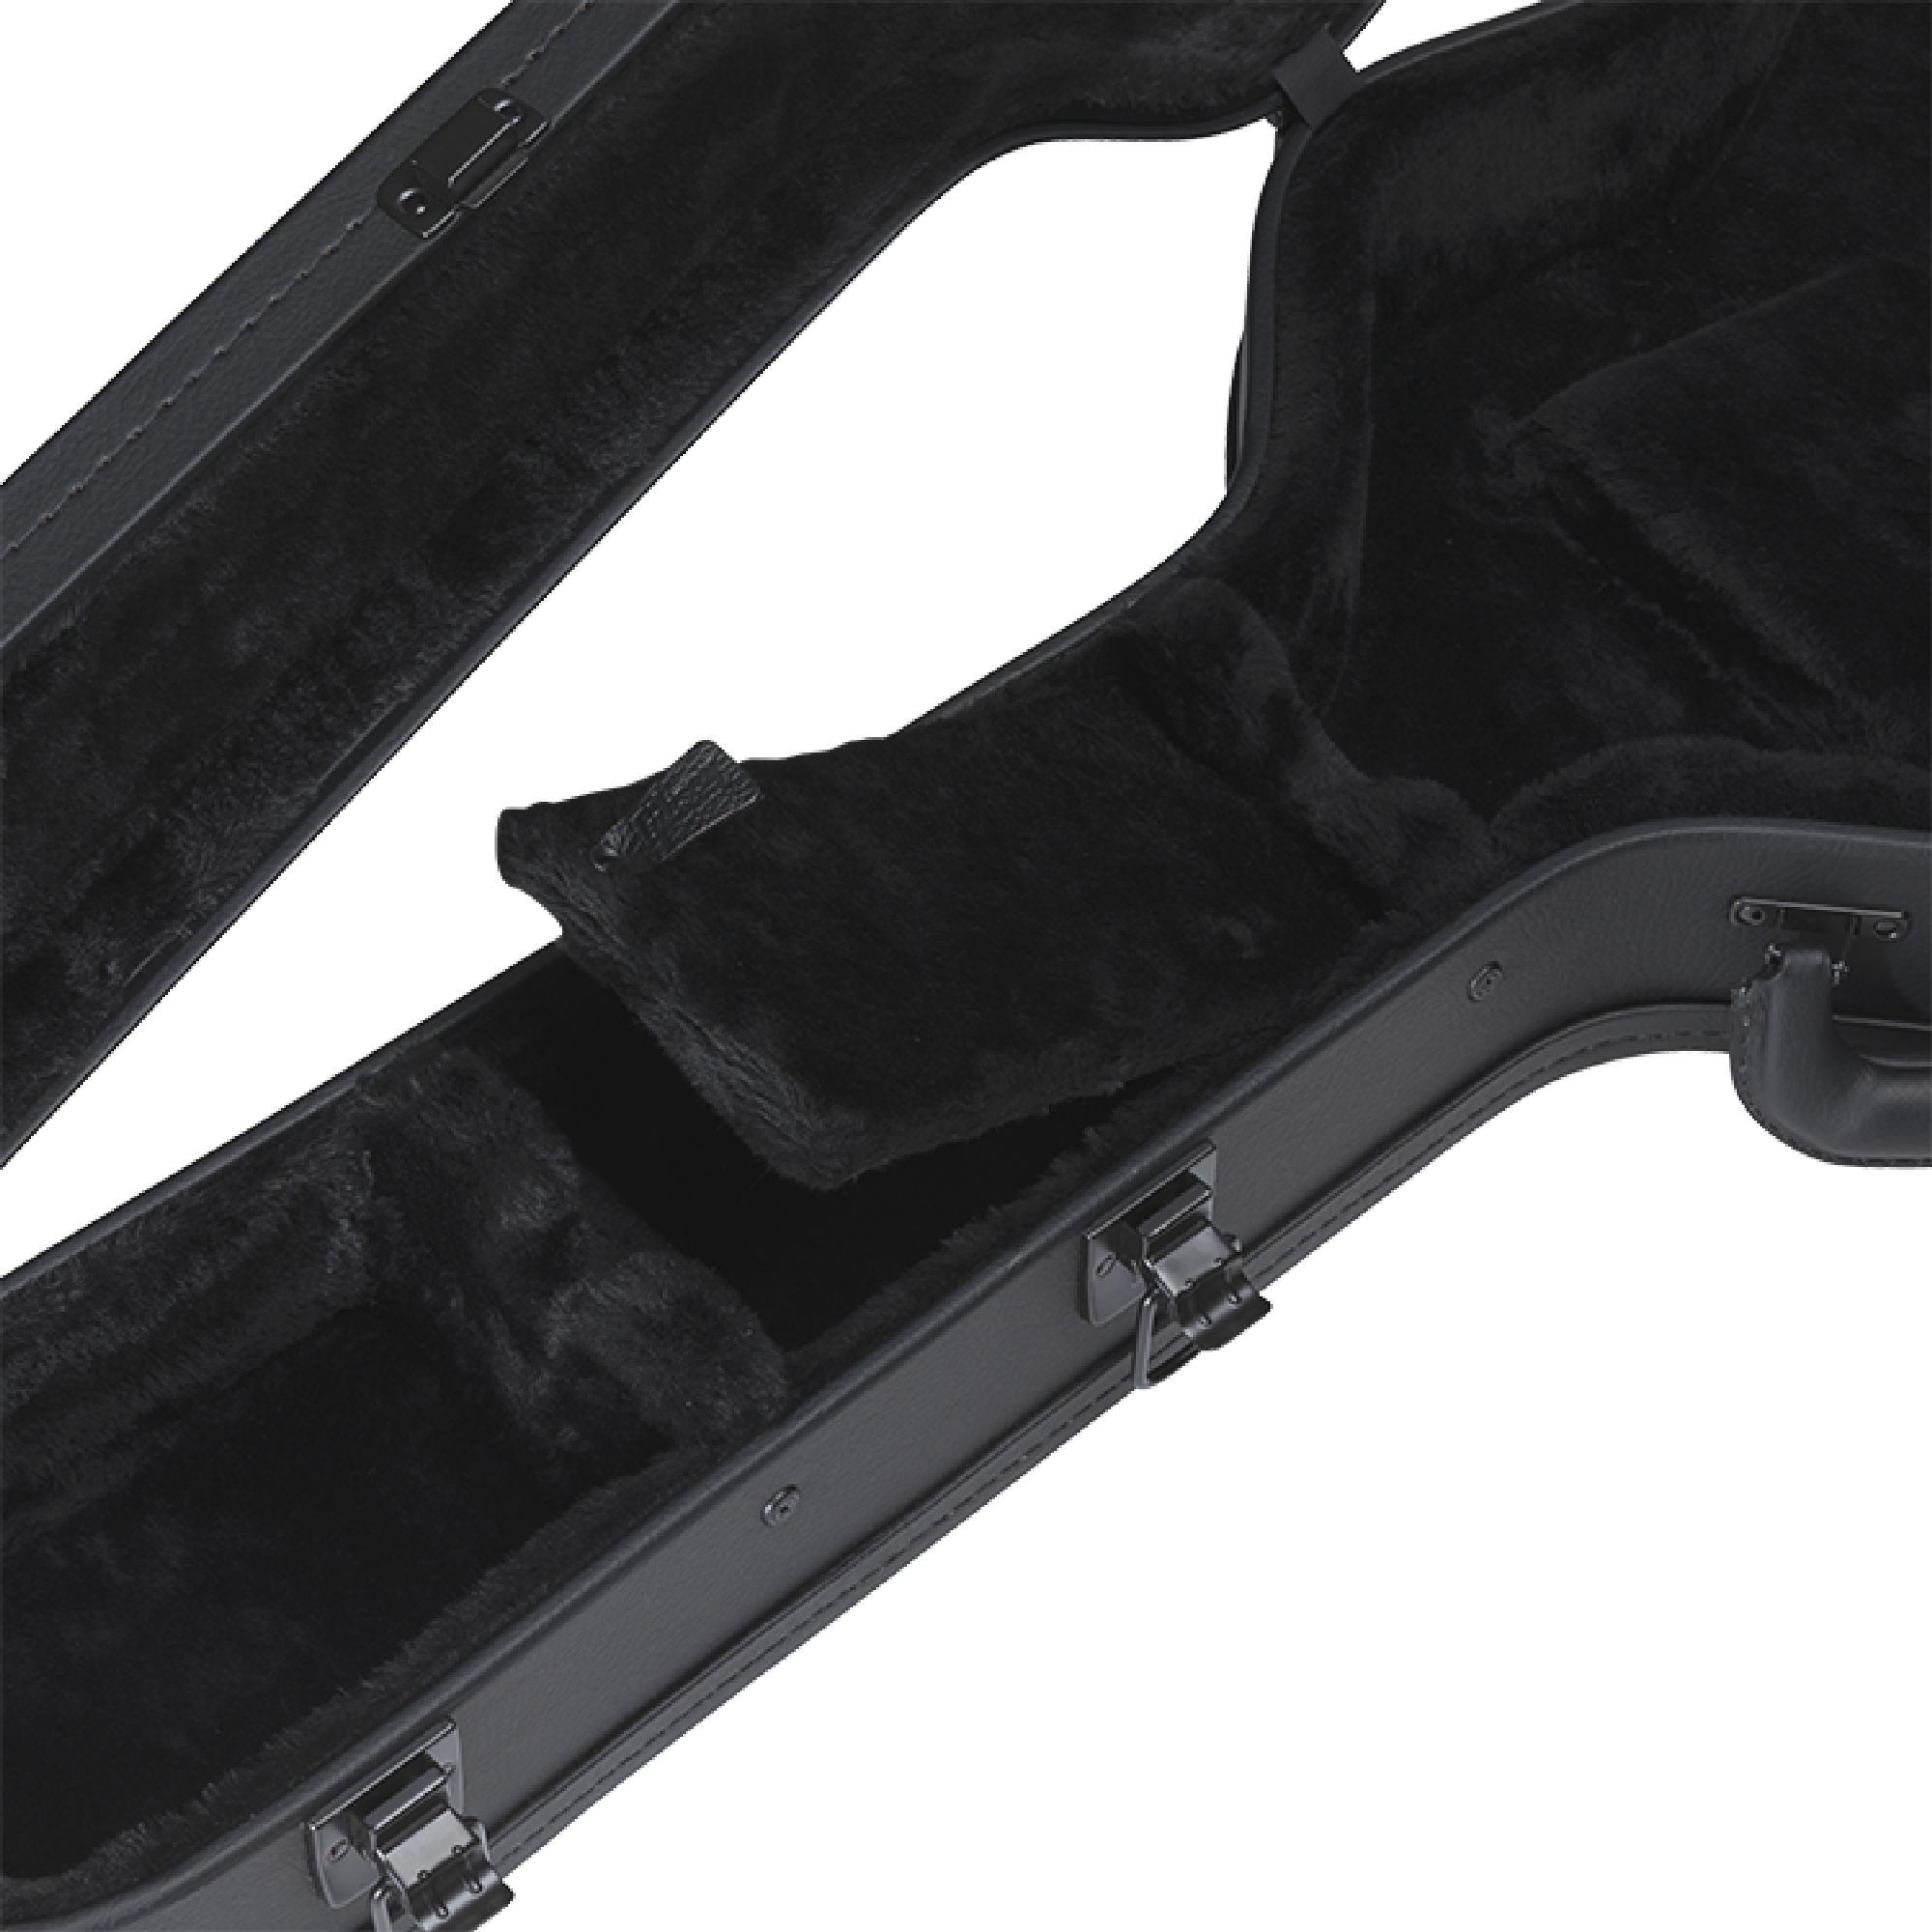 Gibson ES-335 Modern Hardshell Case Black Чехлы и кейсы для электрогитар